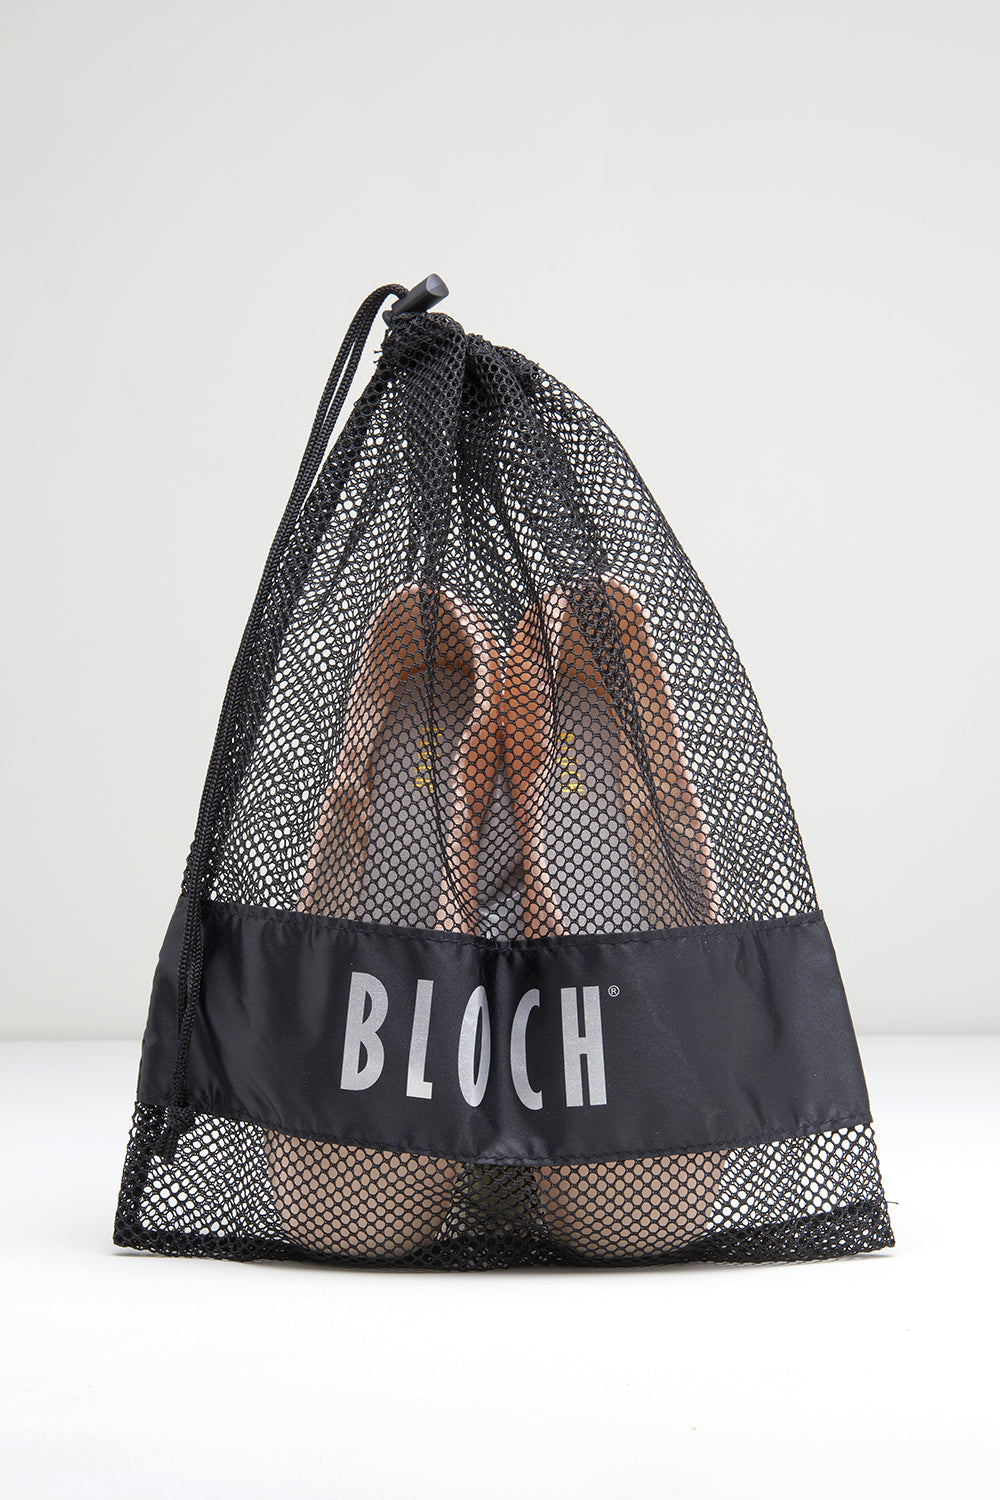 BLOCH Pointe Shoe Bag Large, Black Nylon